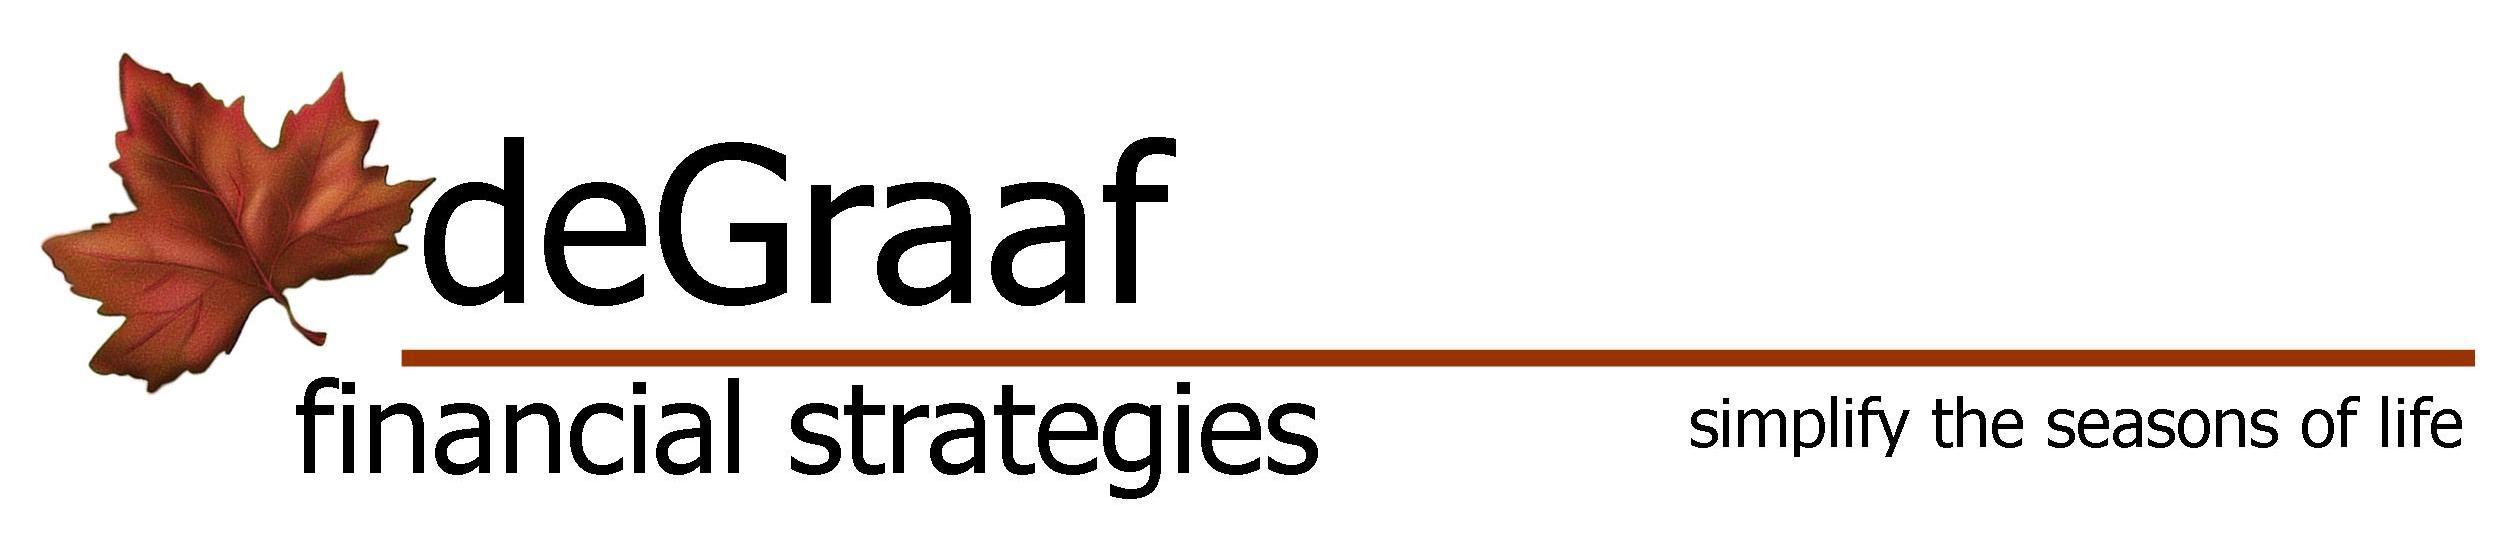 deGraaf Financial Strategies logo